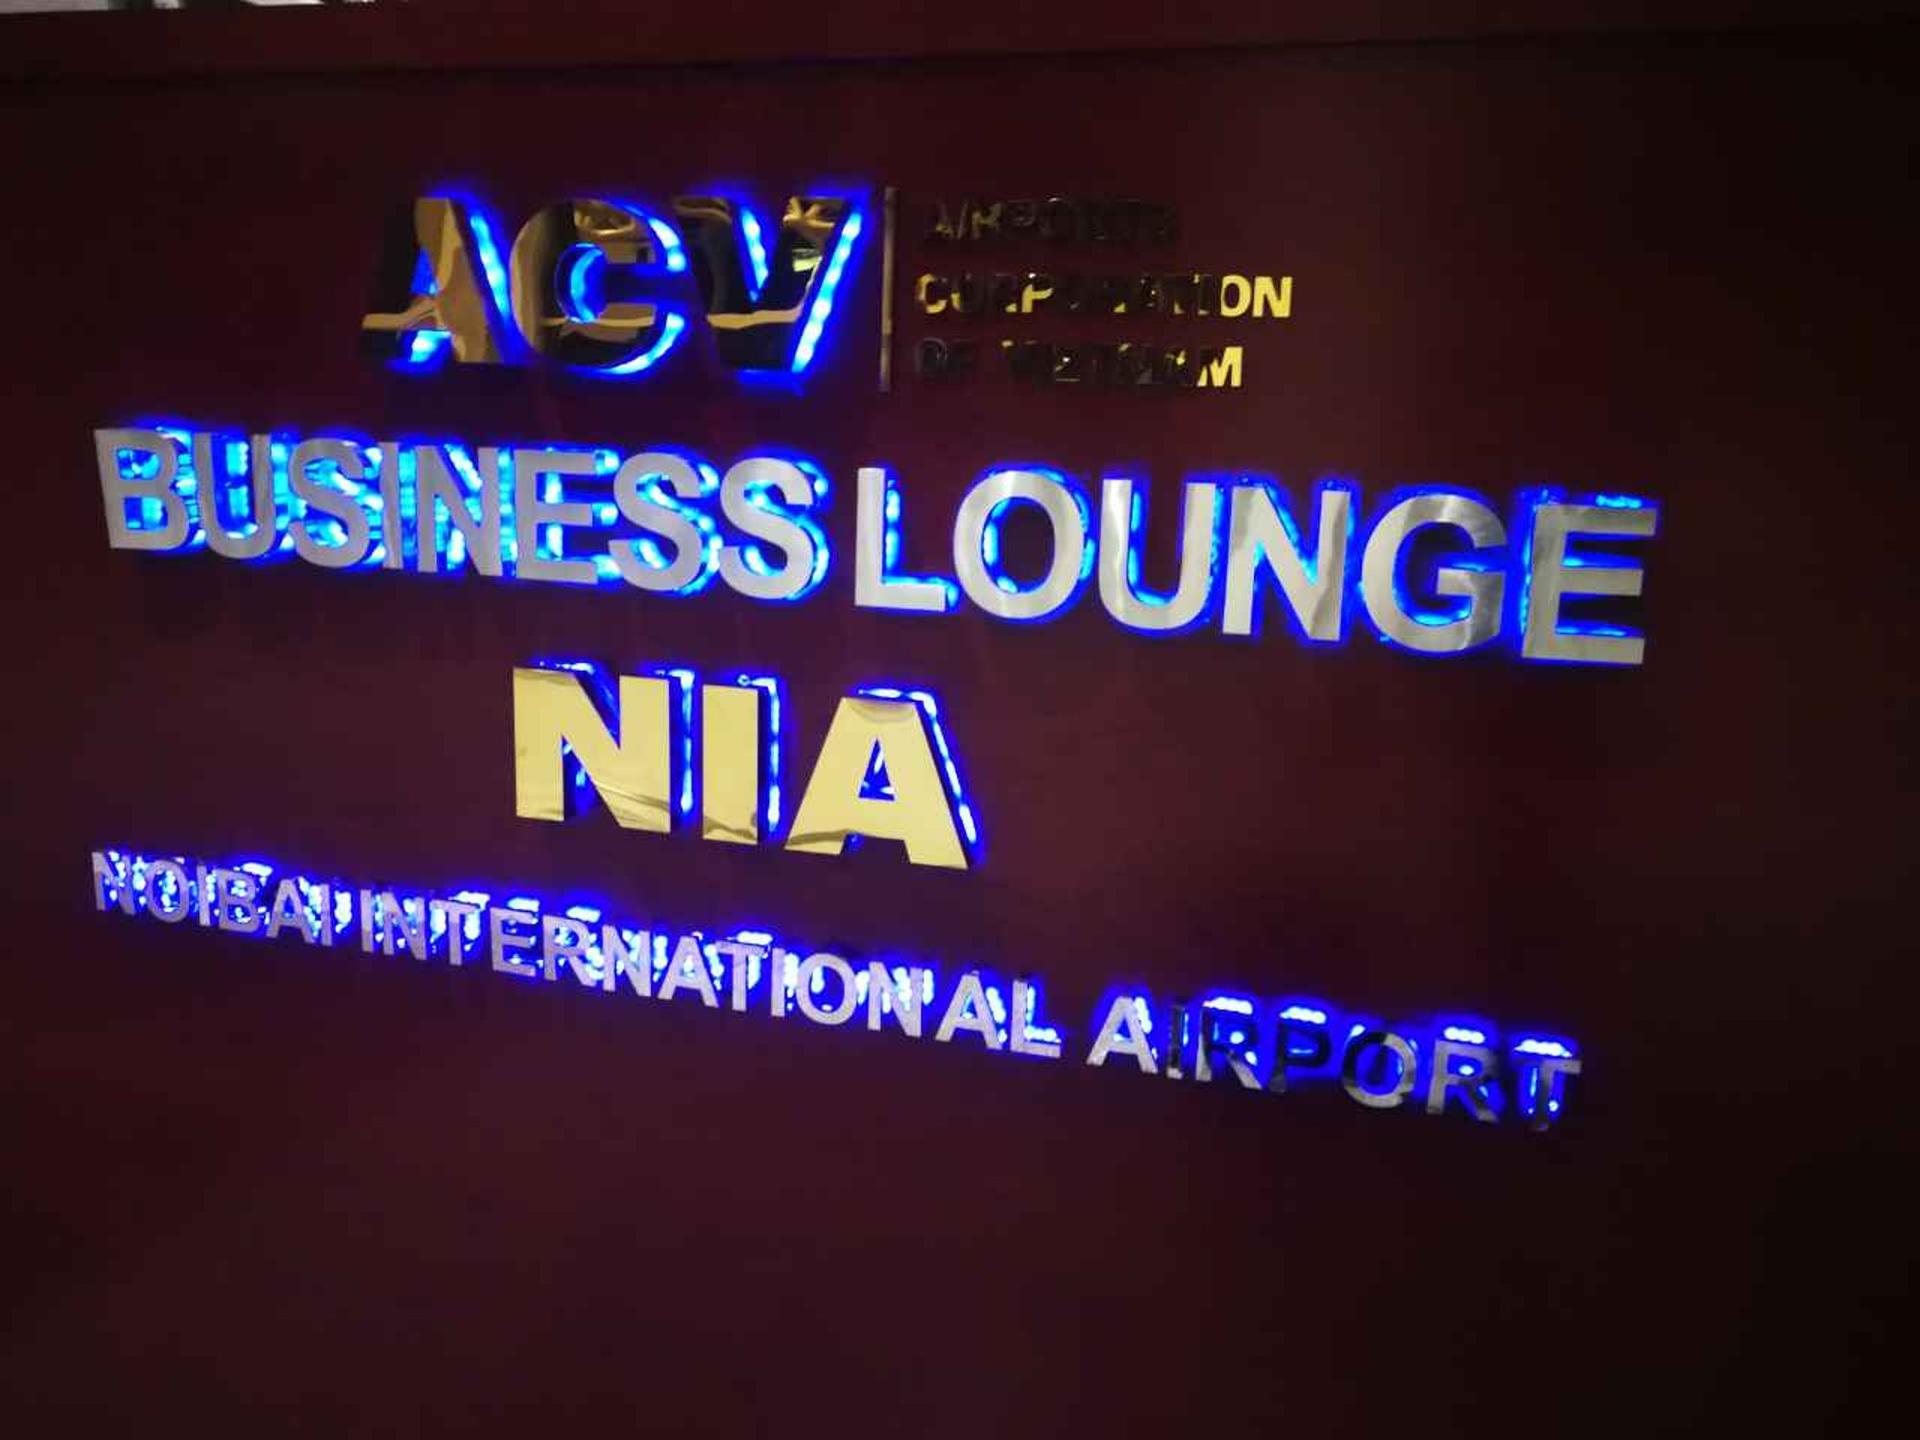 Noi Bai International Airport Business Lounge image 13 of 26